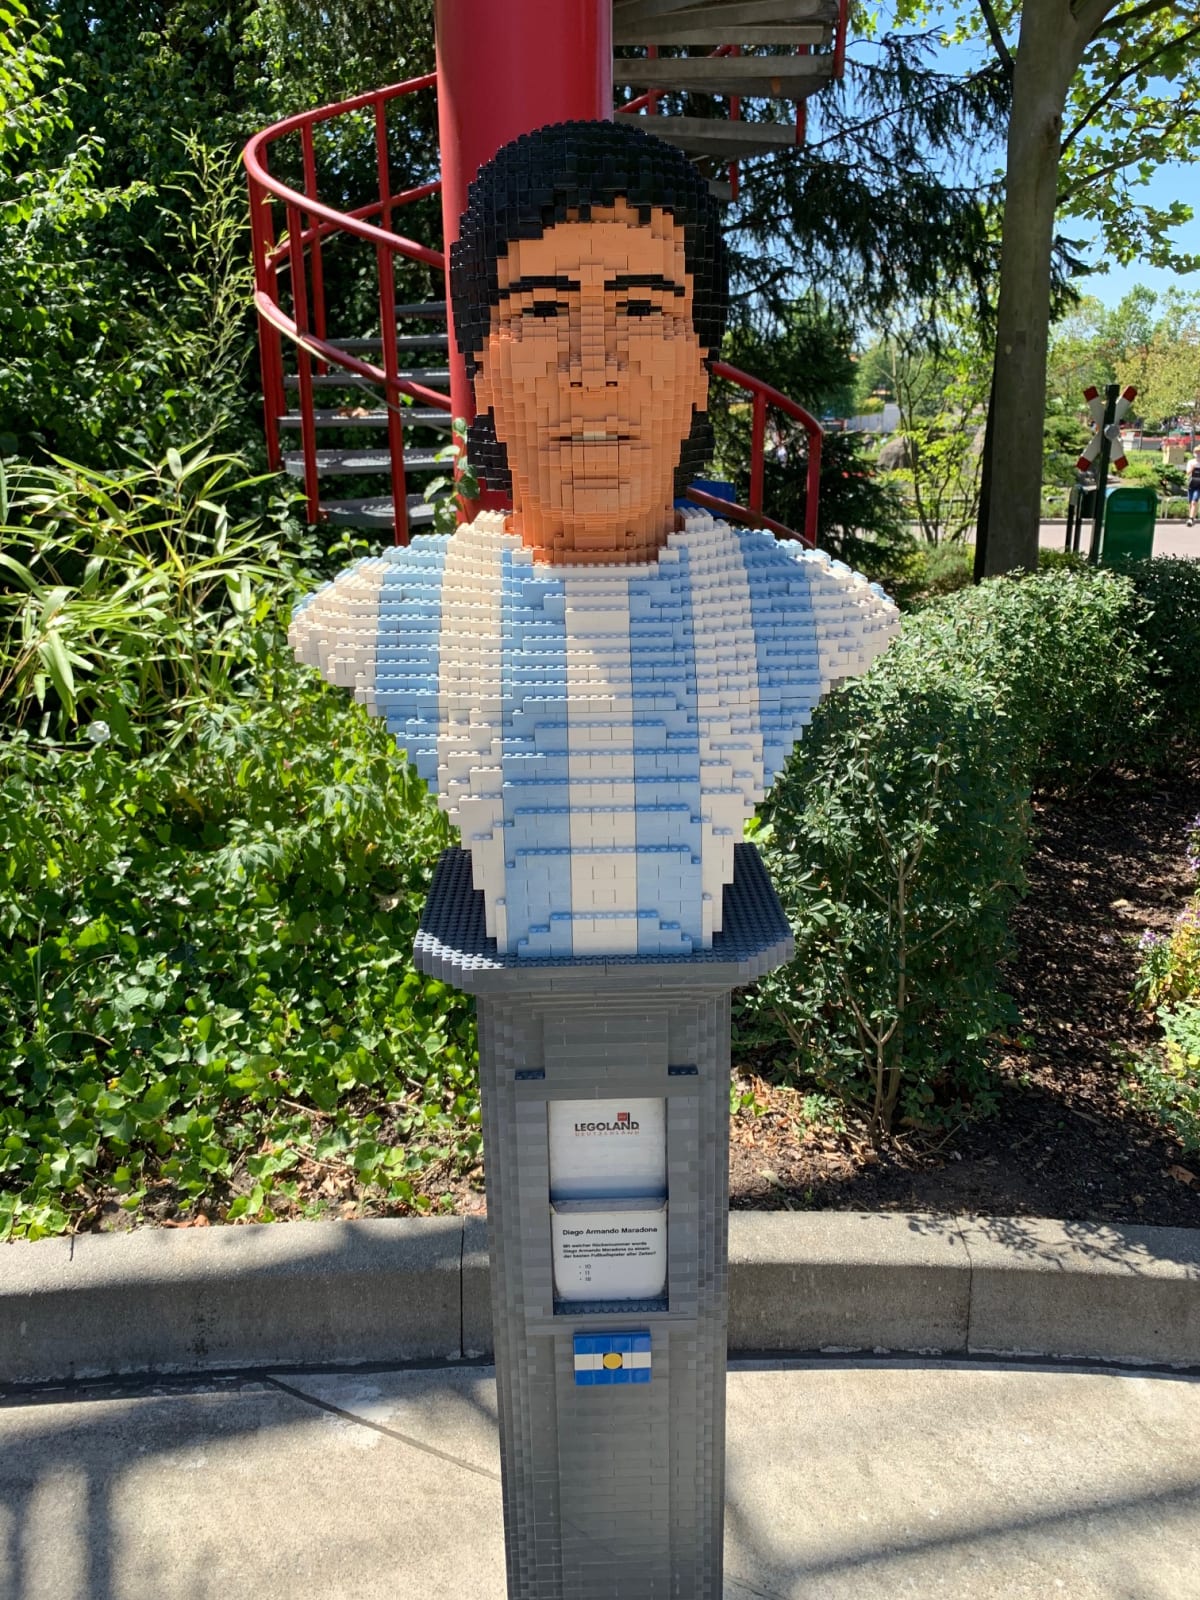 Legolegenda. Diego Armando Maradona z kostiček Lega.